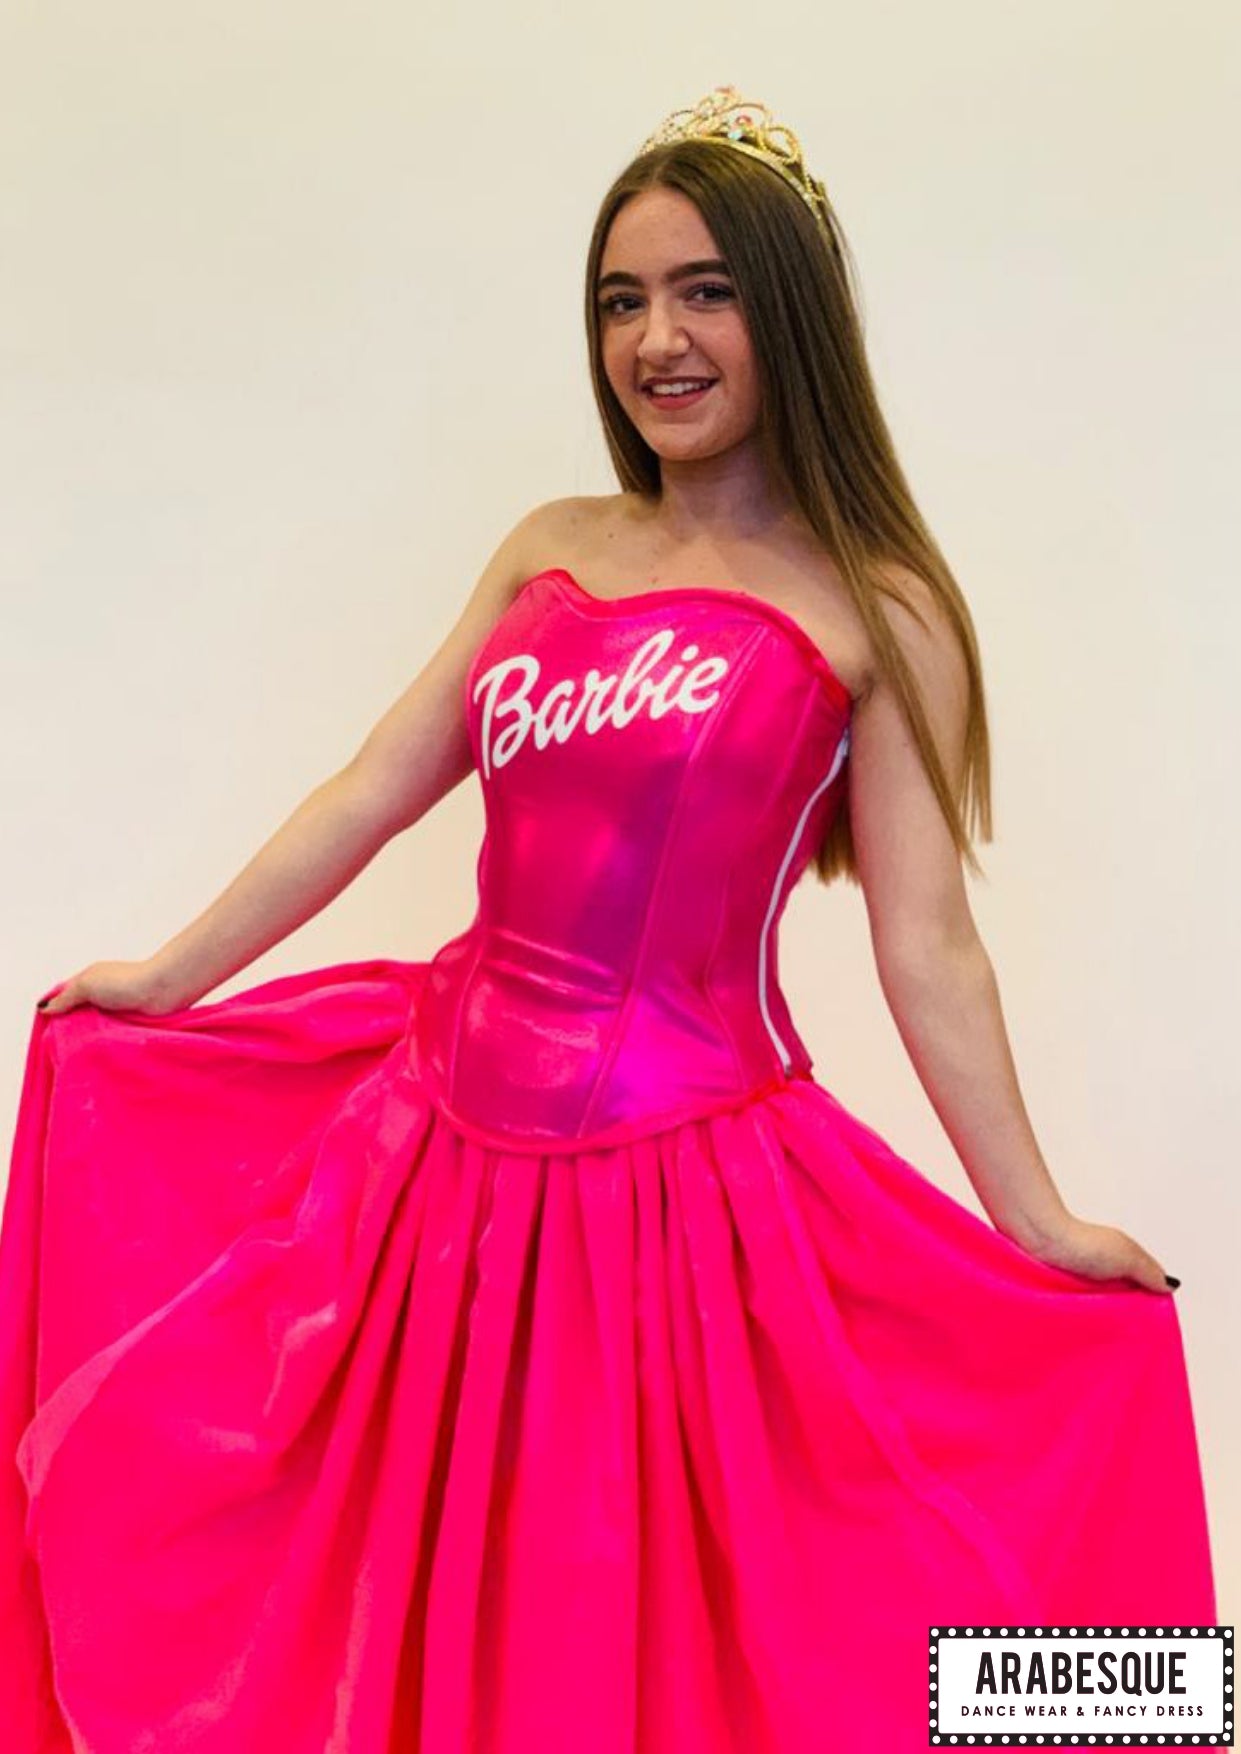 Barbie Dress Up Games Online - www.illva.com 1694986146